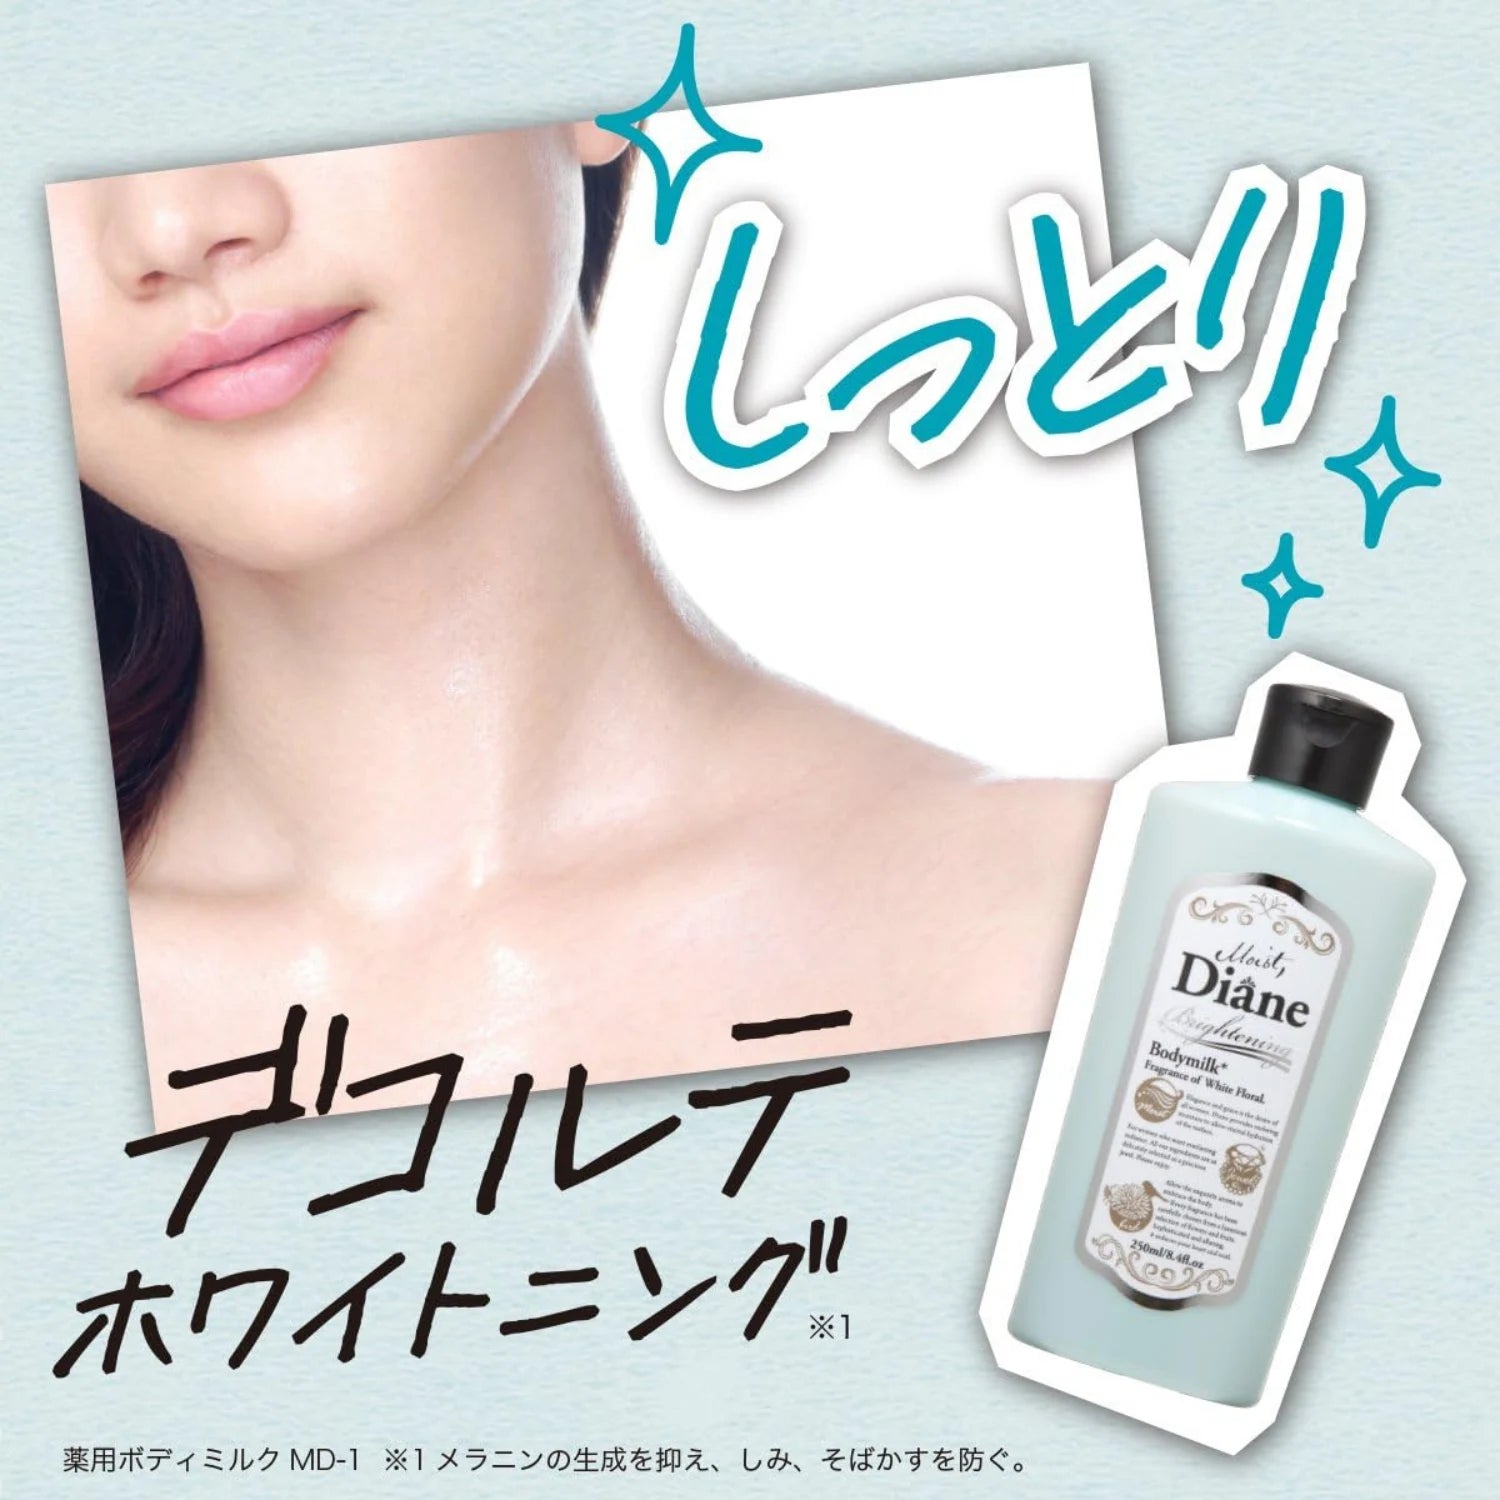 Diane Brightening Body Milk 250ml - Buy Me Japan